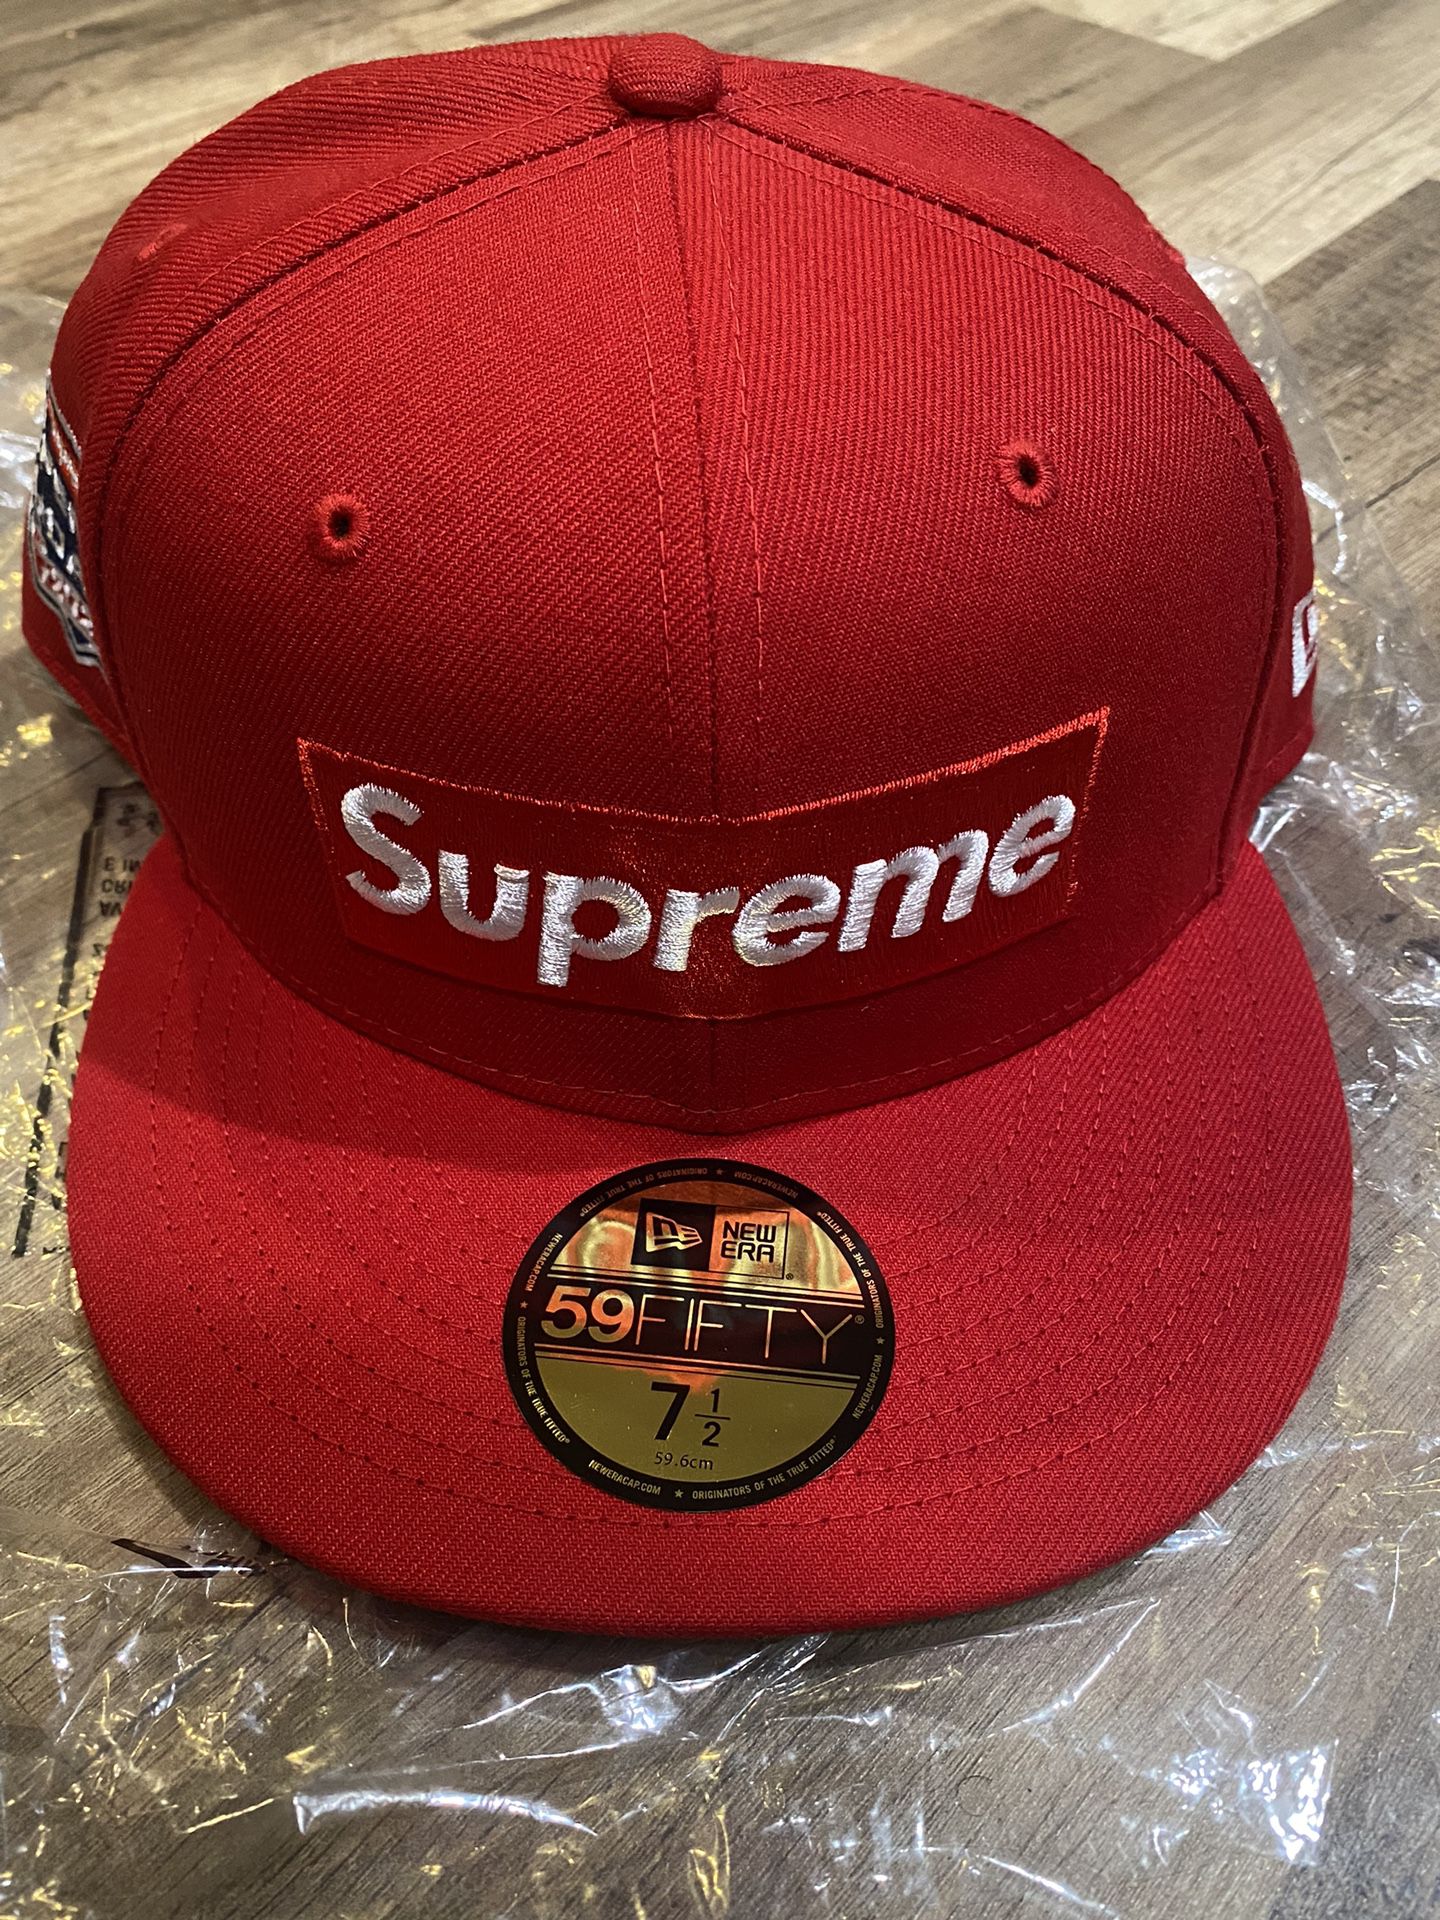 Supreme/New Era Box Logo Fitted Cap Size 7-1/2